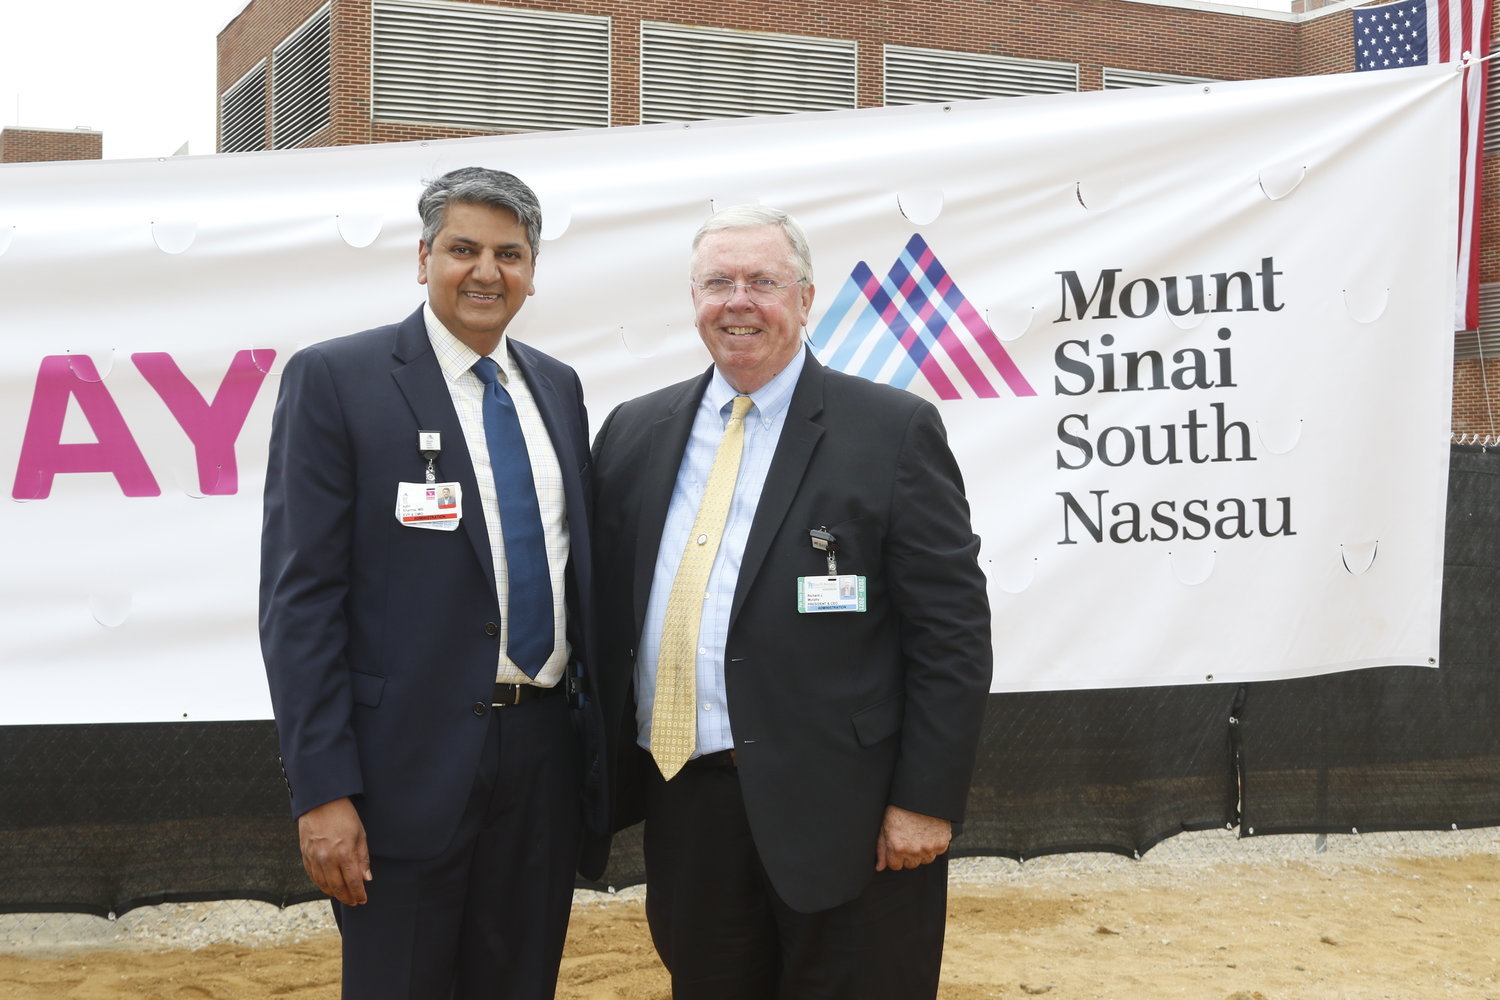 On Sept. 1, Dr. Adhi Sharma, left, took over as president of Mount Sinai South Nassau hospital in Oceanside from Richard Murphy.